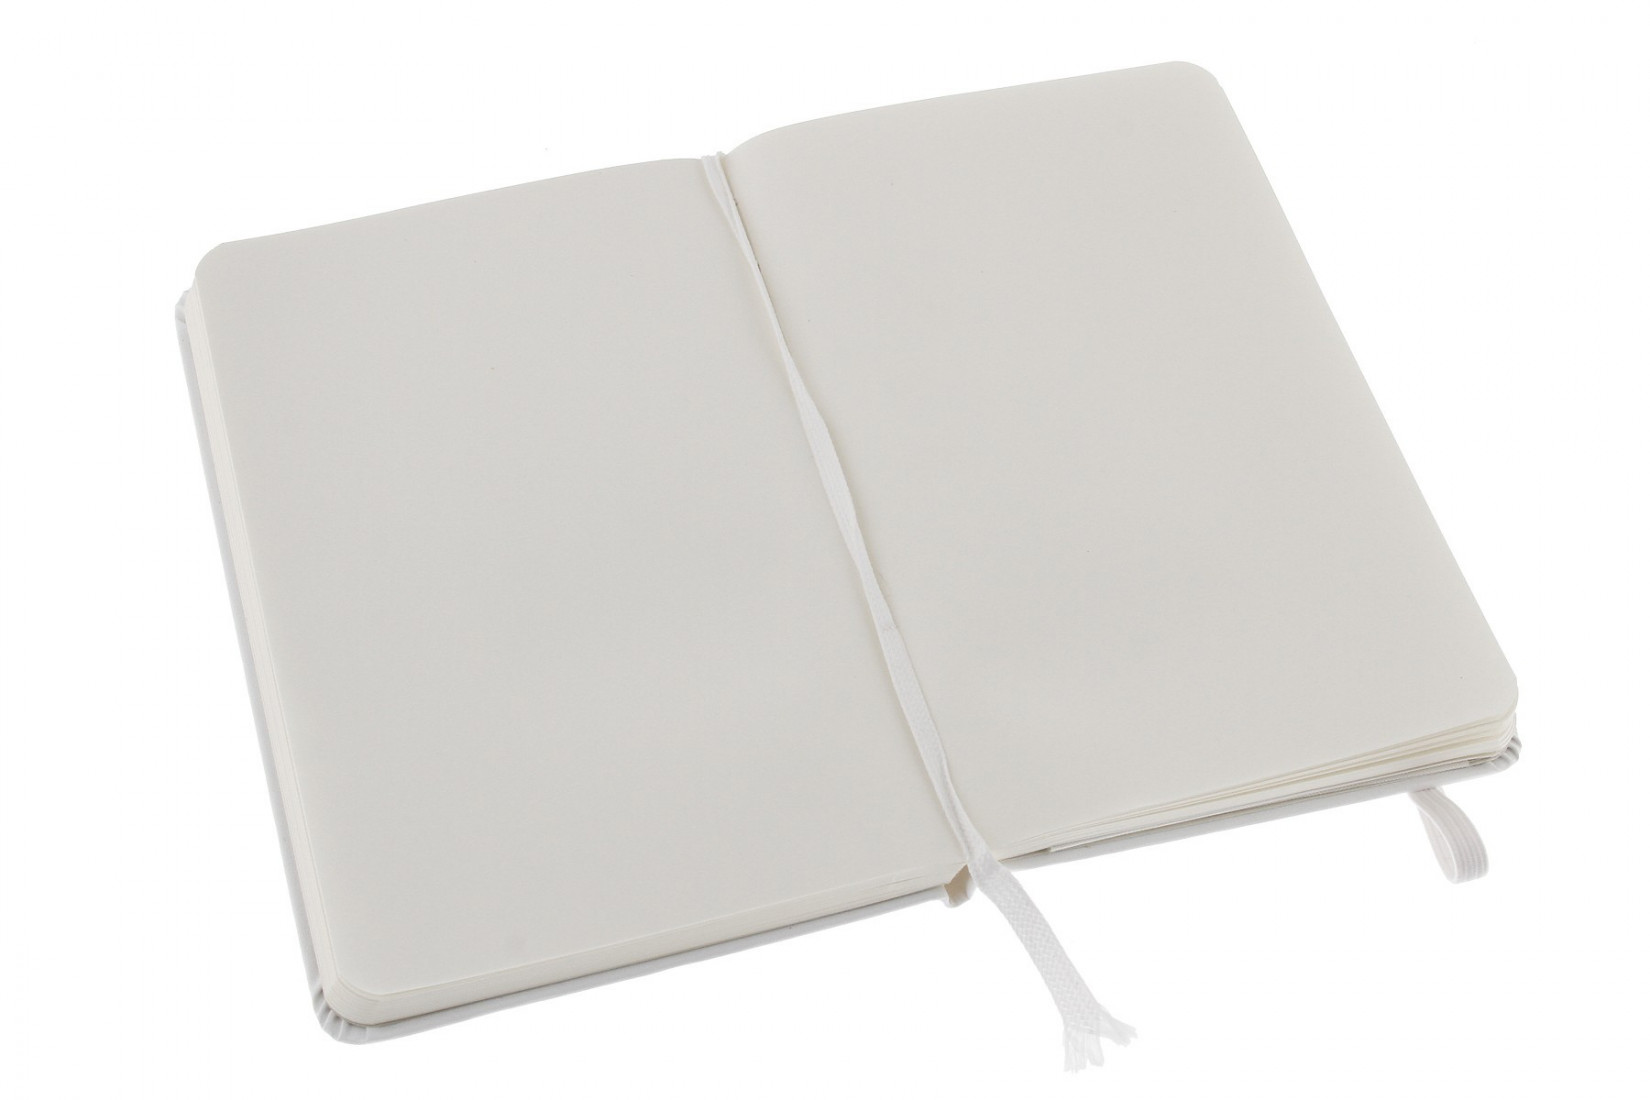 Notebook Pocket 9x14 Plain White Hard Cover Moleskine